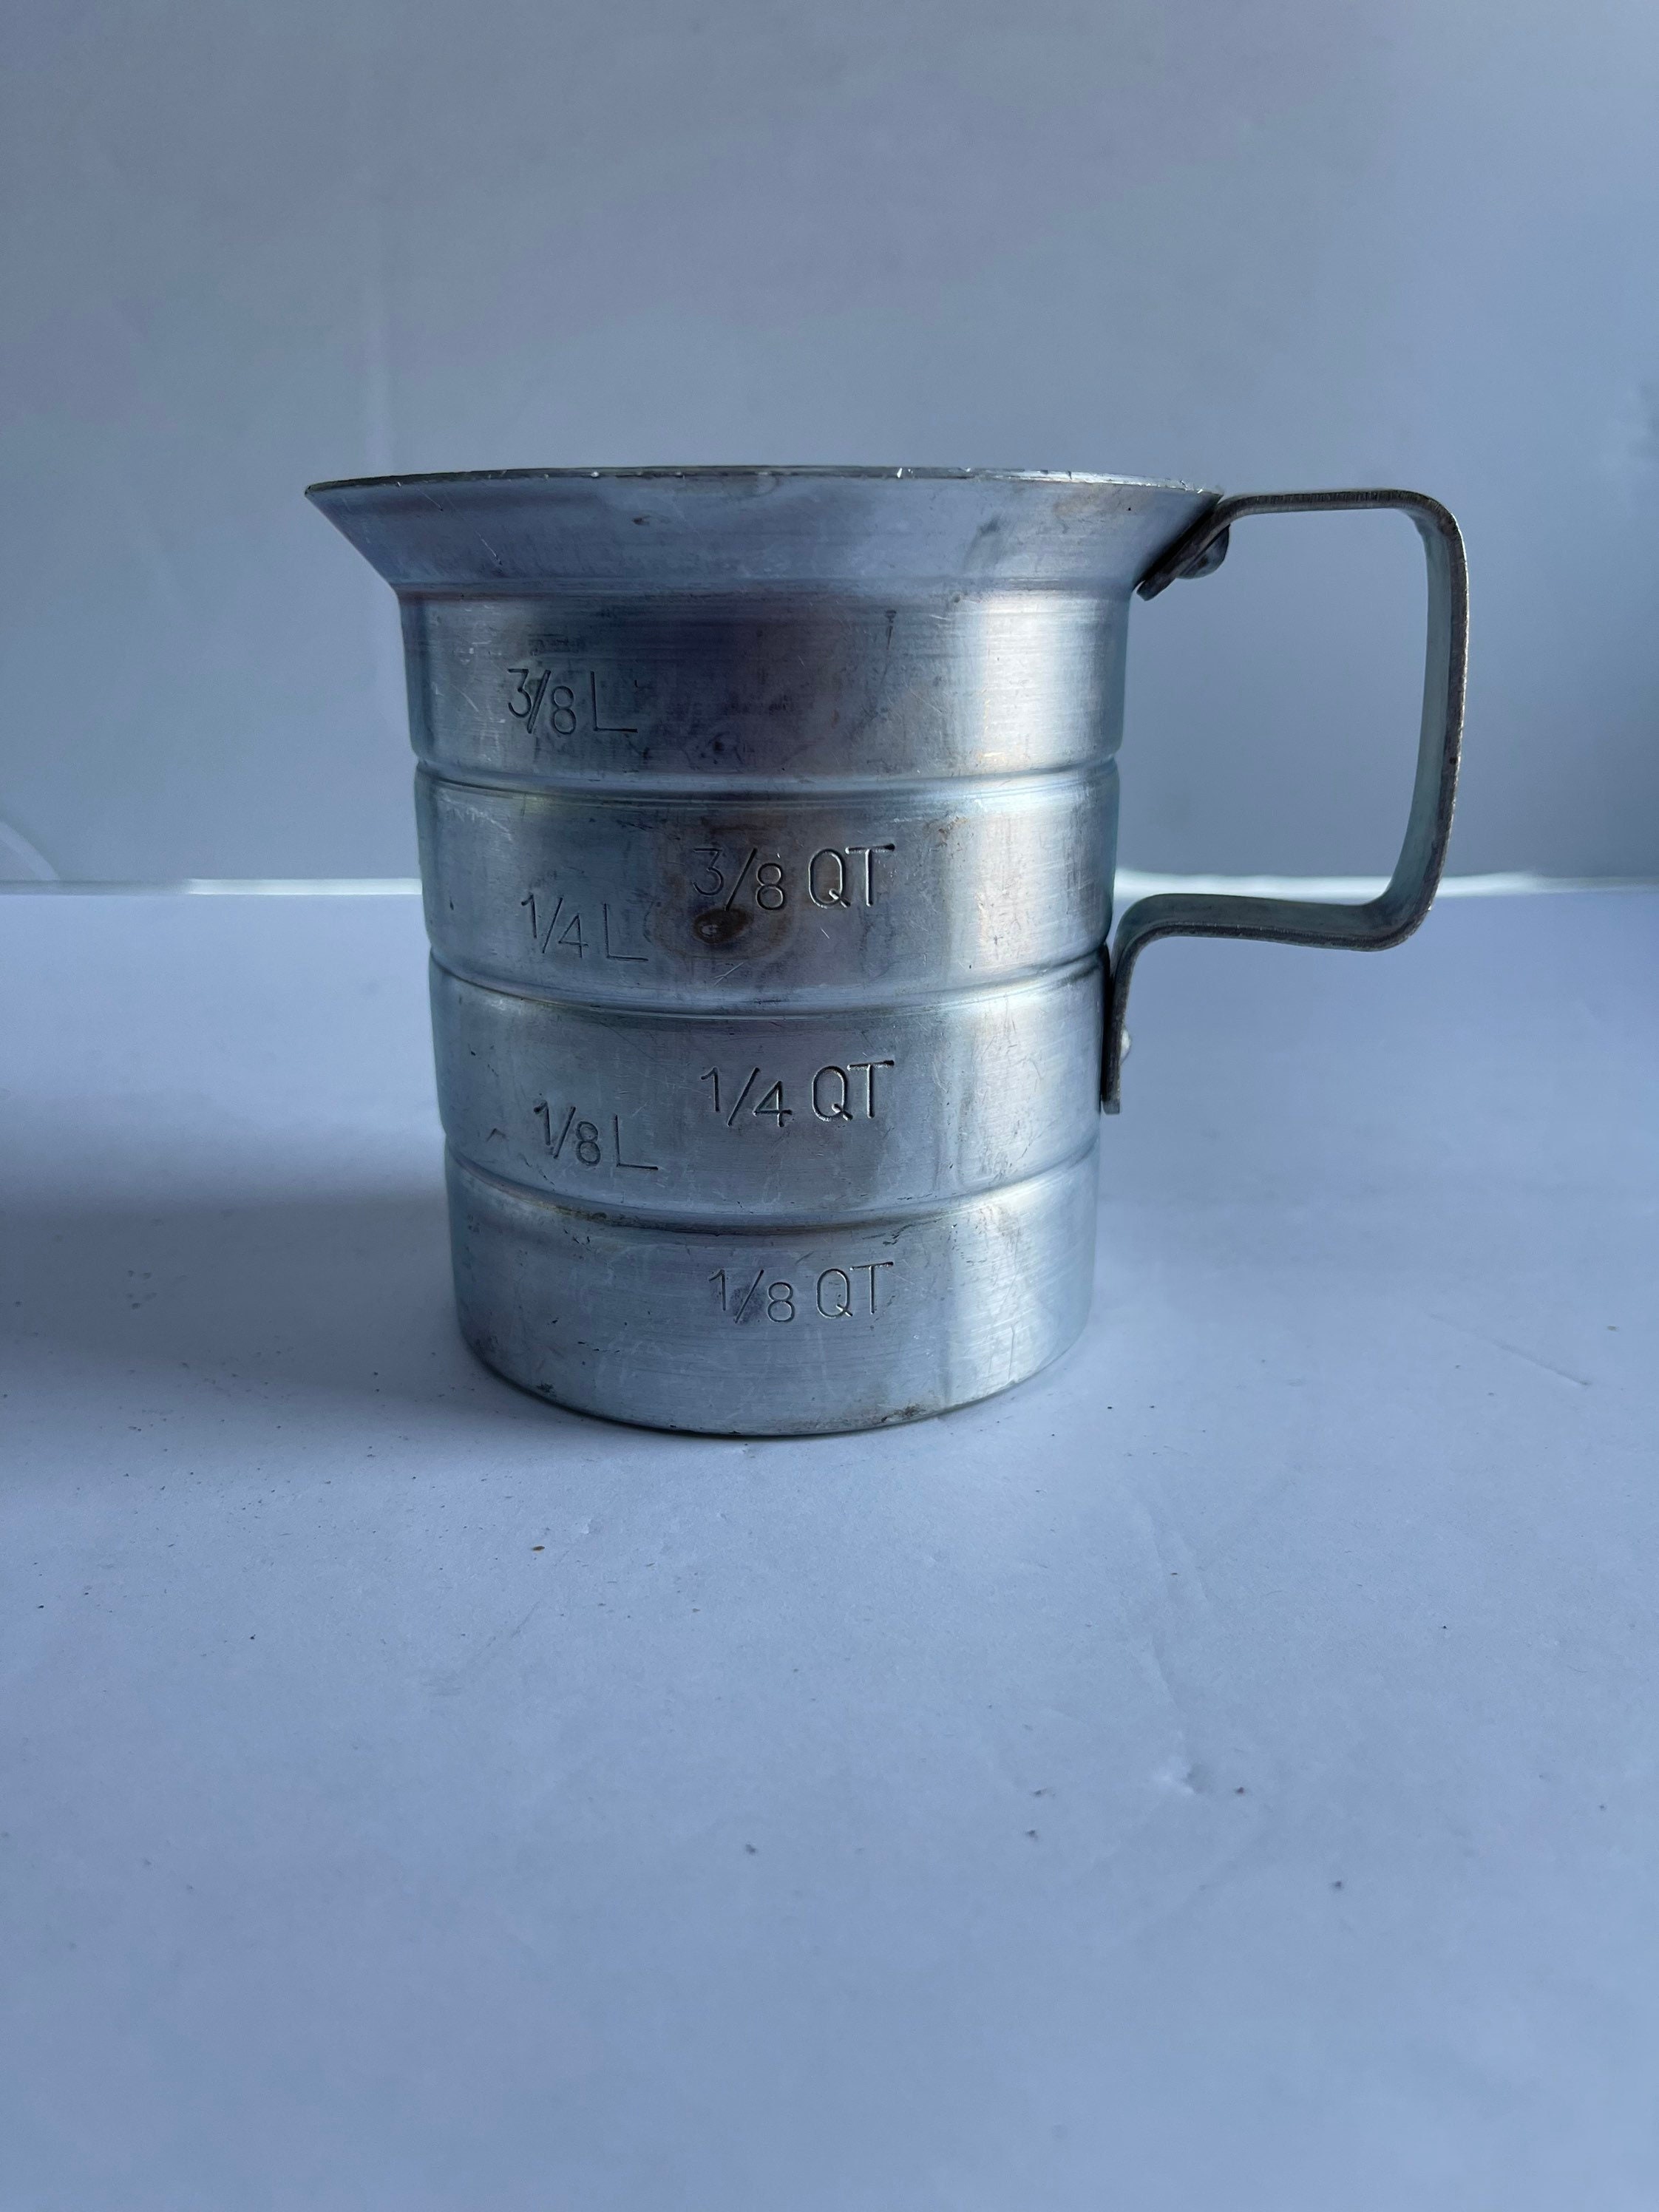 Better Houseware 1 Cup Aluminum Measuring Cup